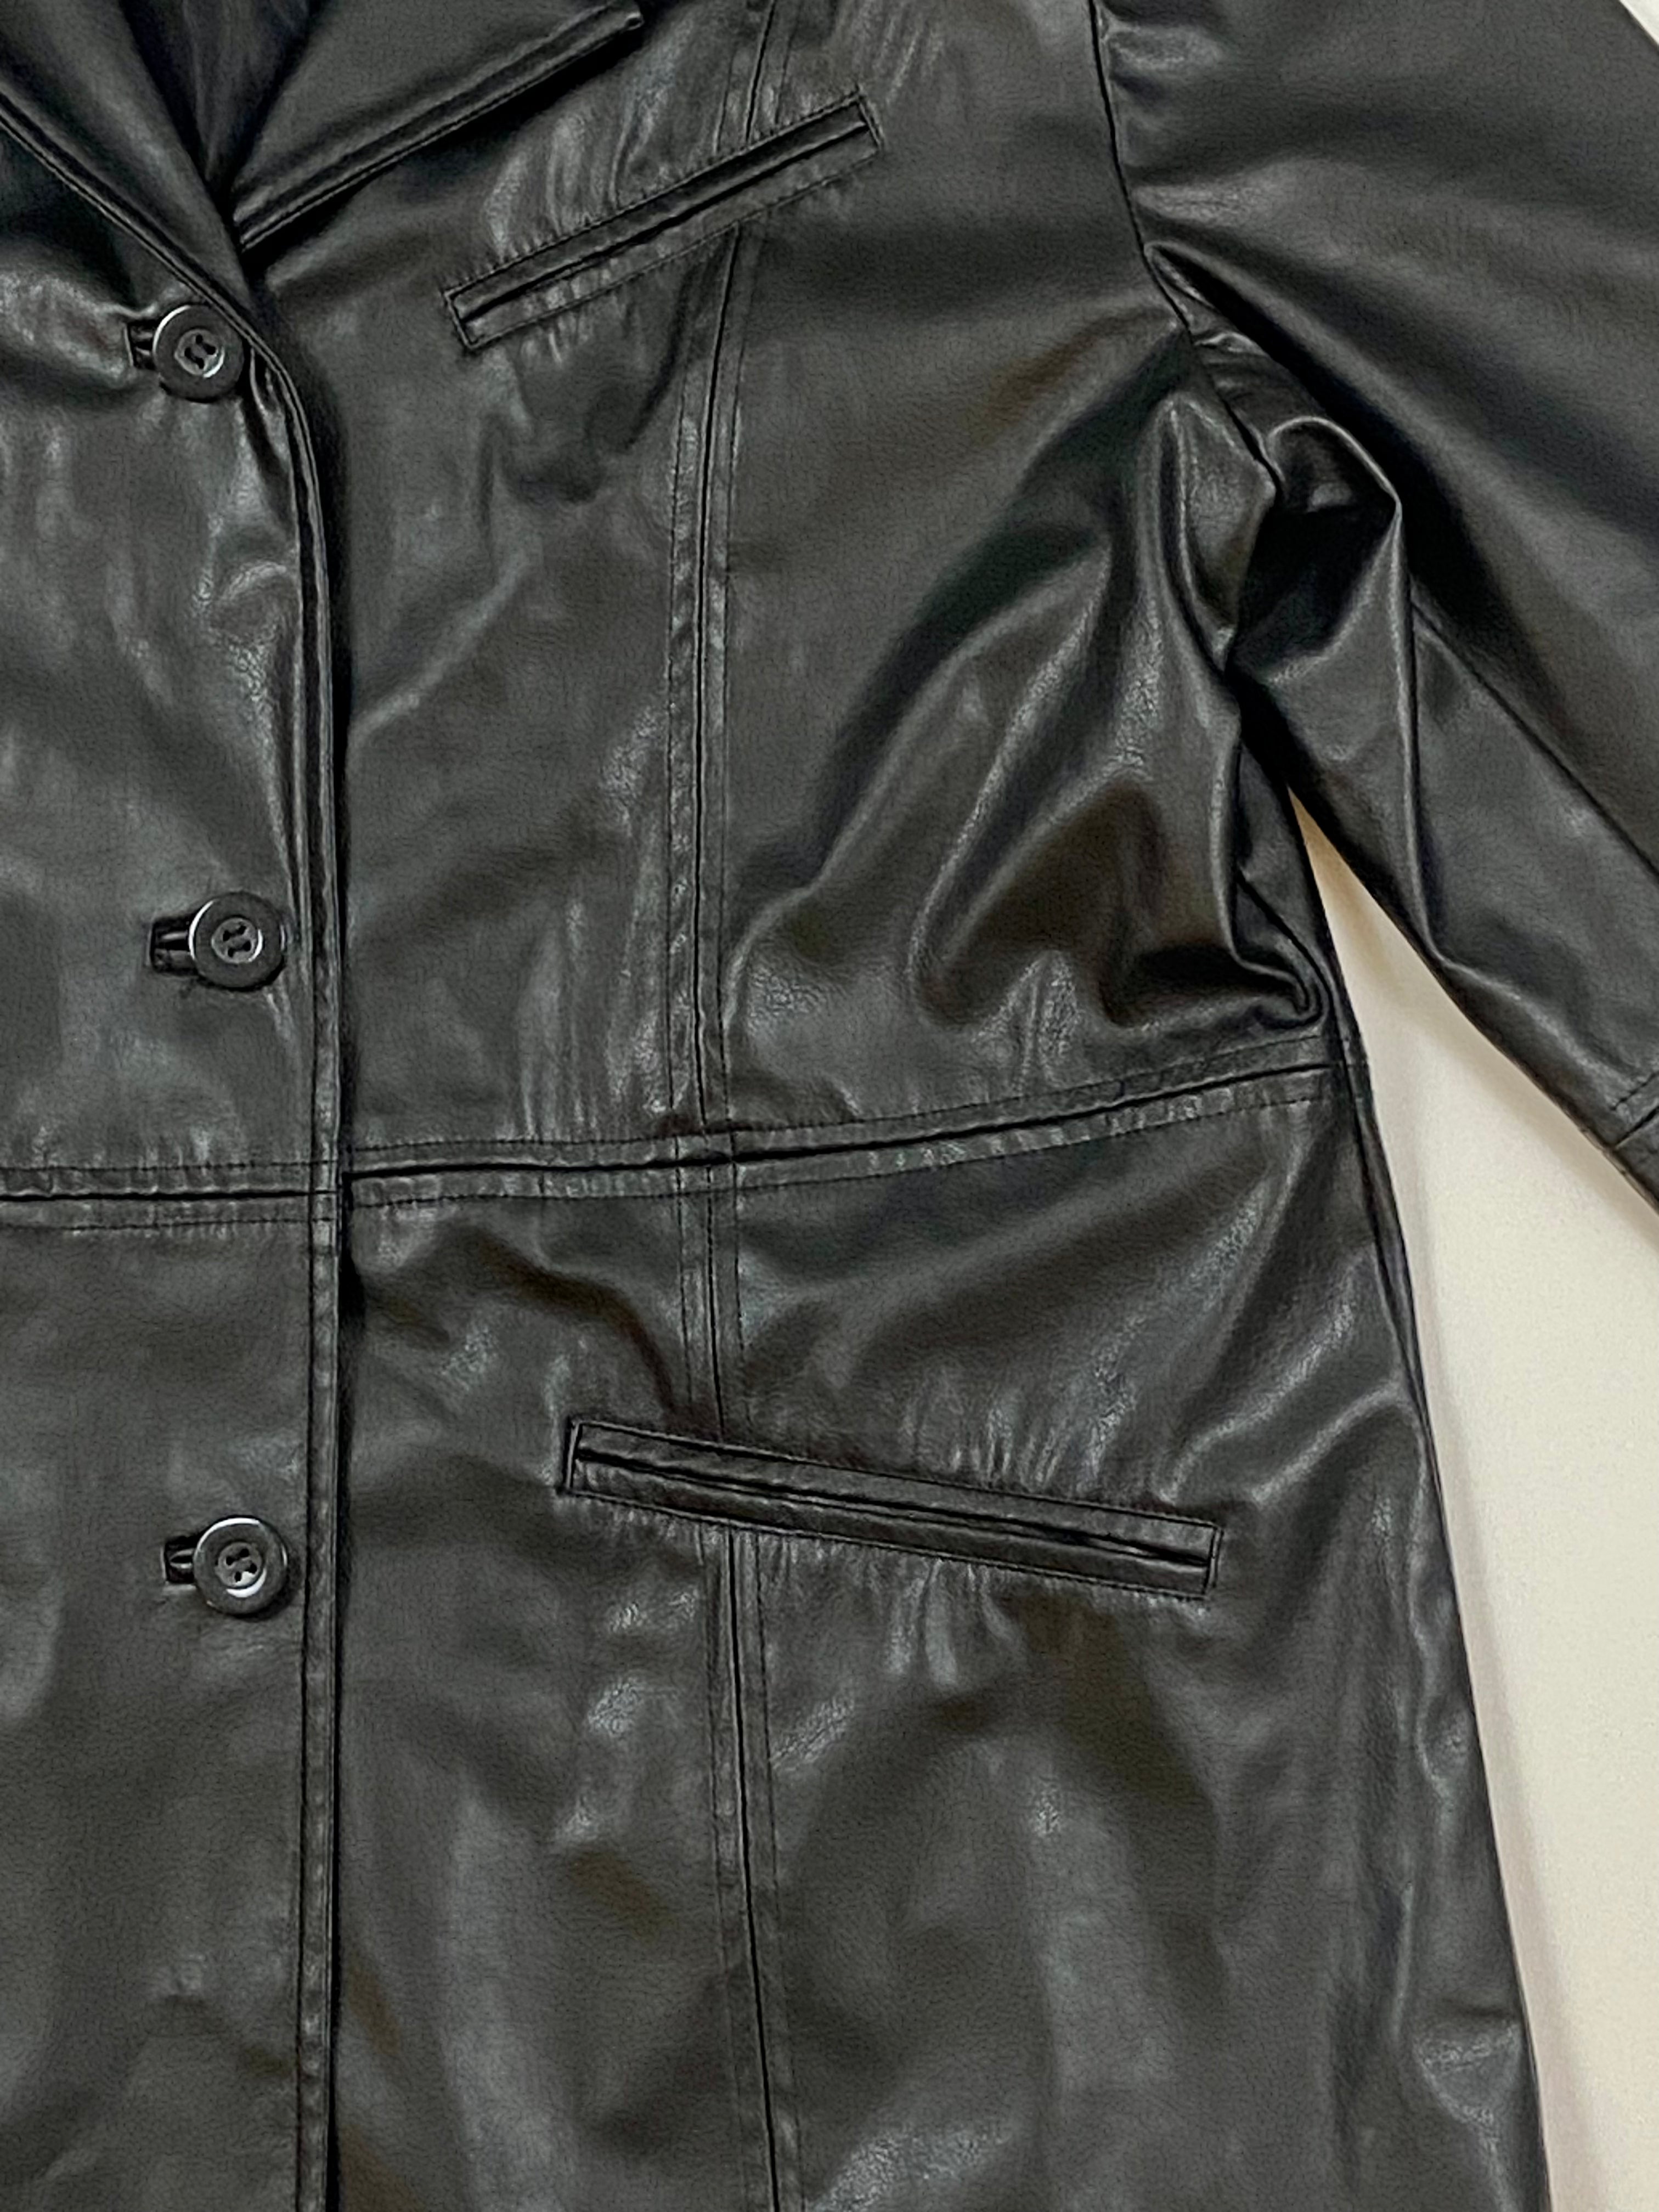 Outbrook black leather jacket